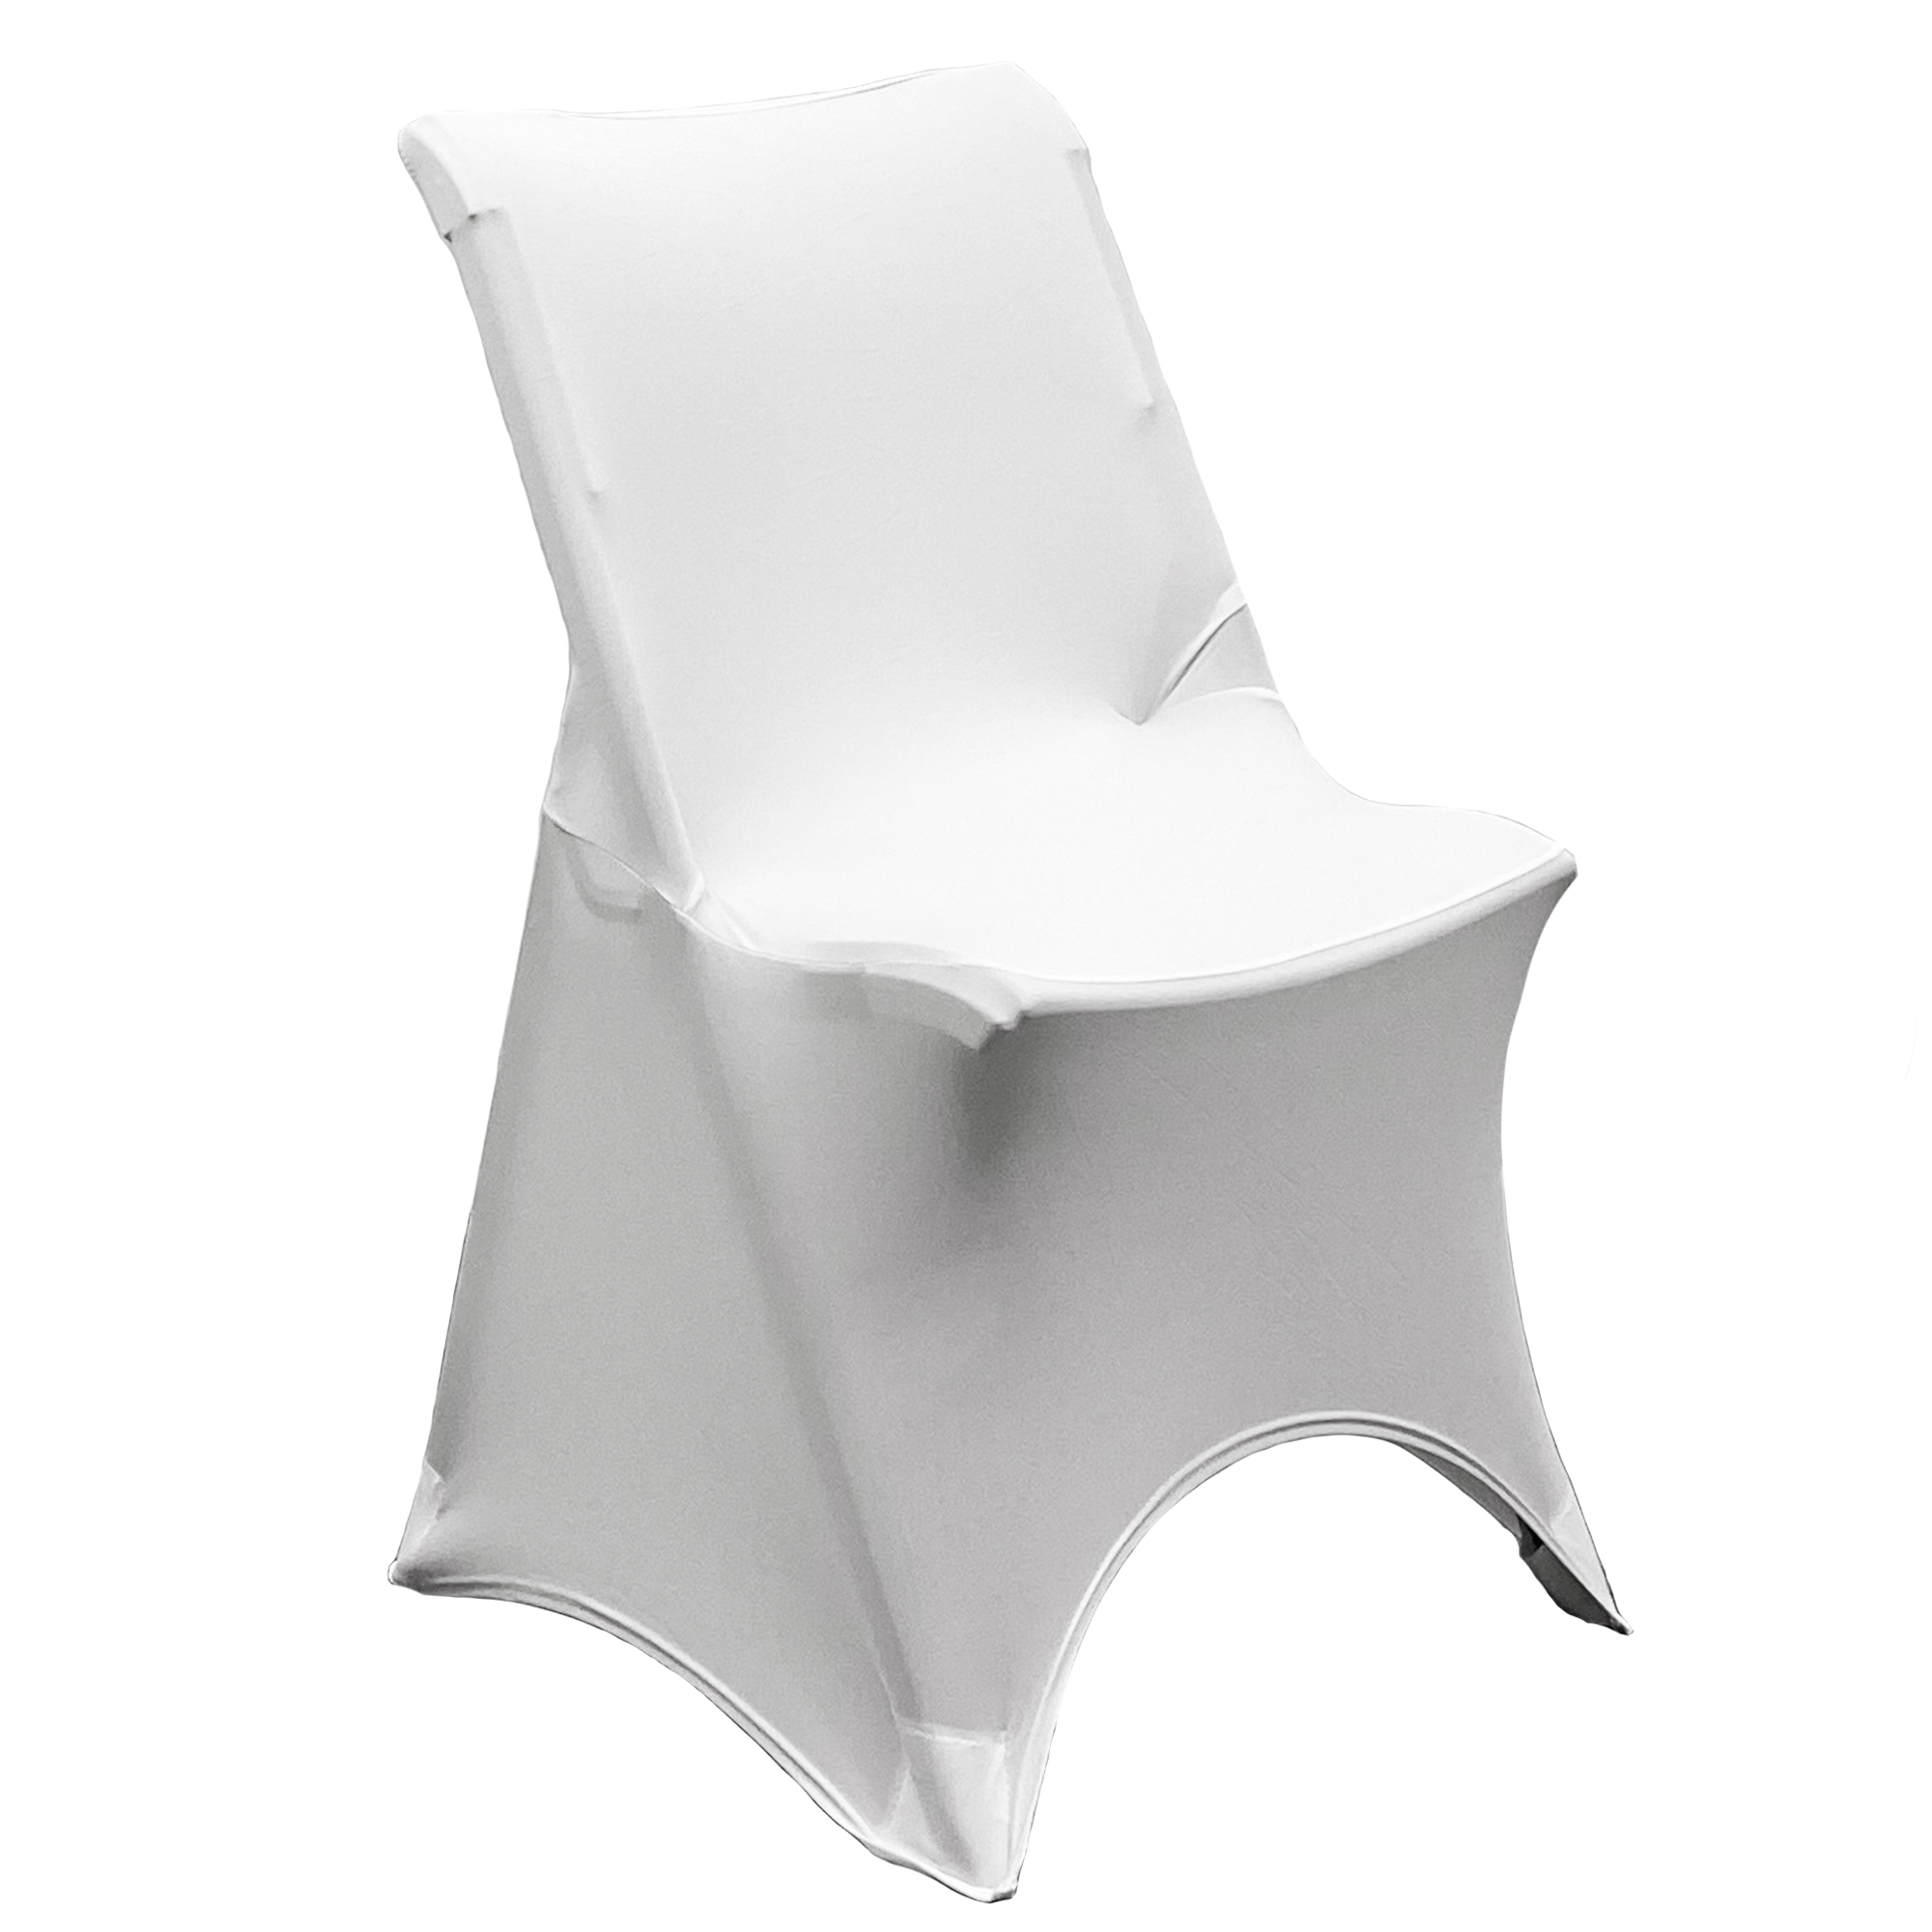 Lavender Lifetime Folding Spandex Chair Covers, Stretch Lycra